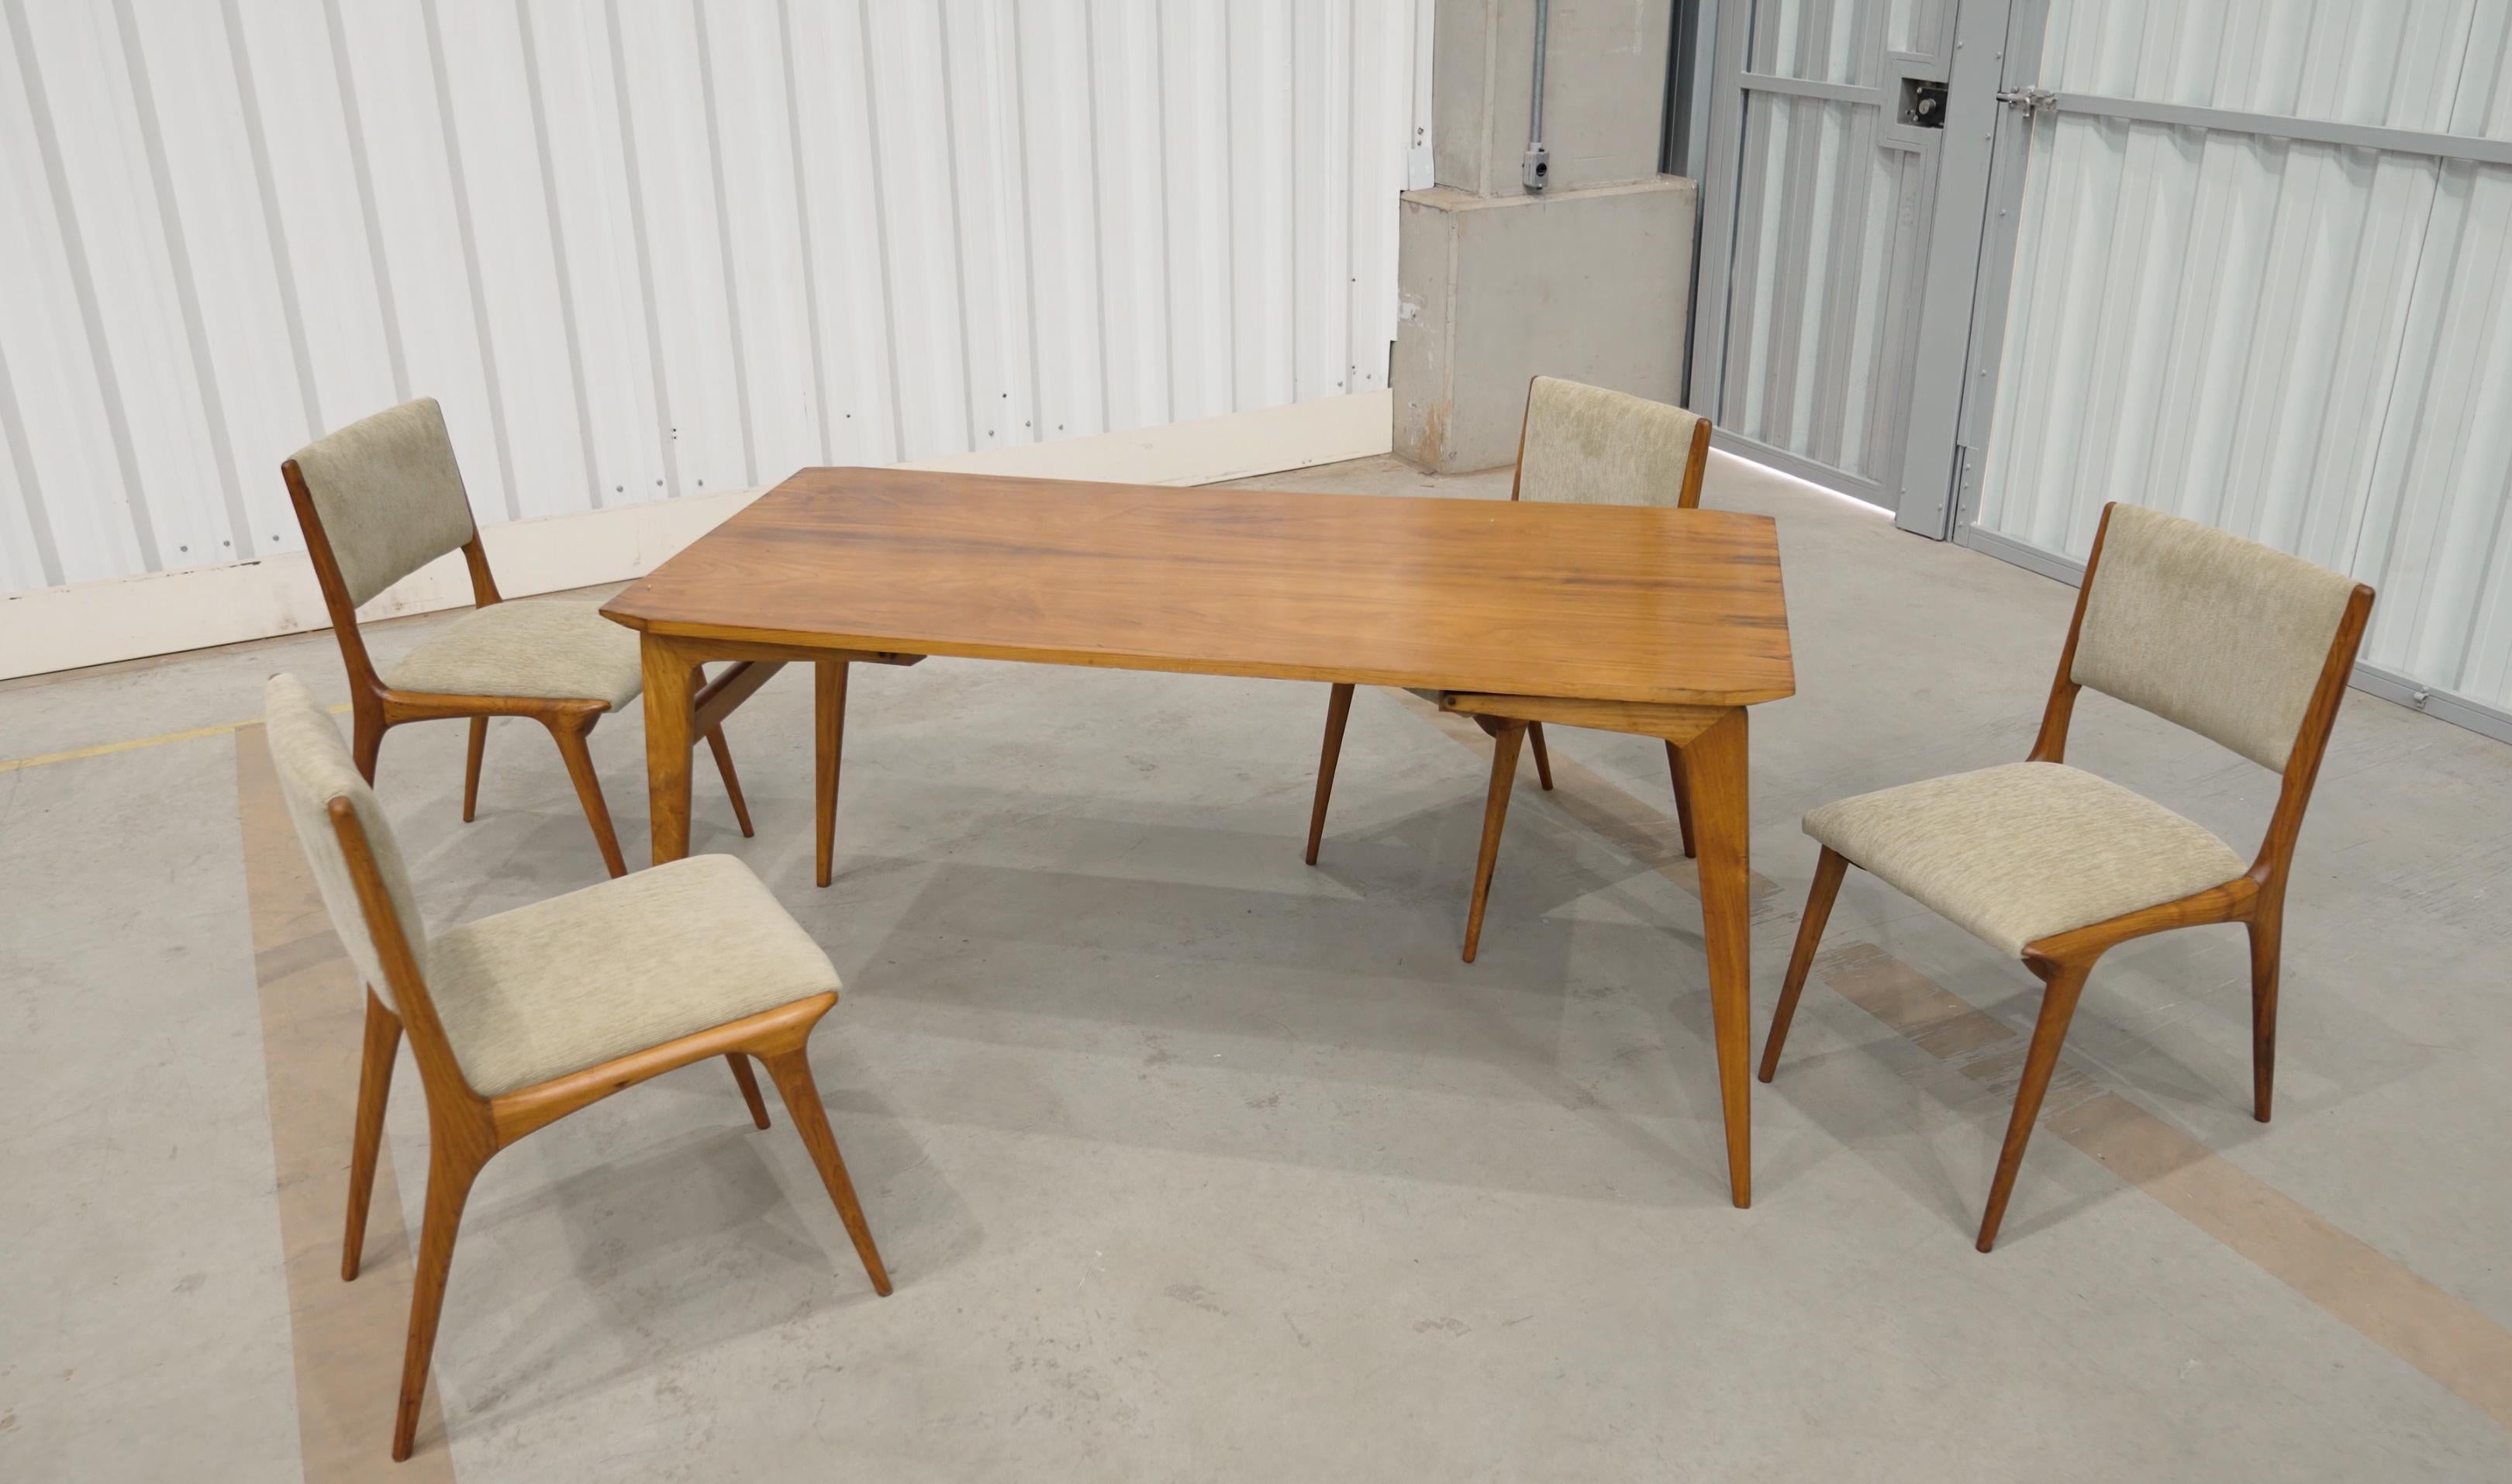 20th Century Brazilian Modern Foldable Dining & Coffee Table in Hardwood, Carlo Hauner Brazil